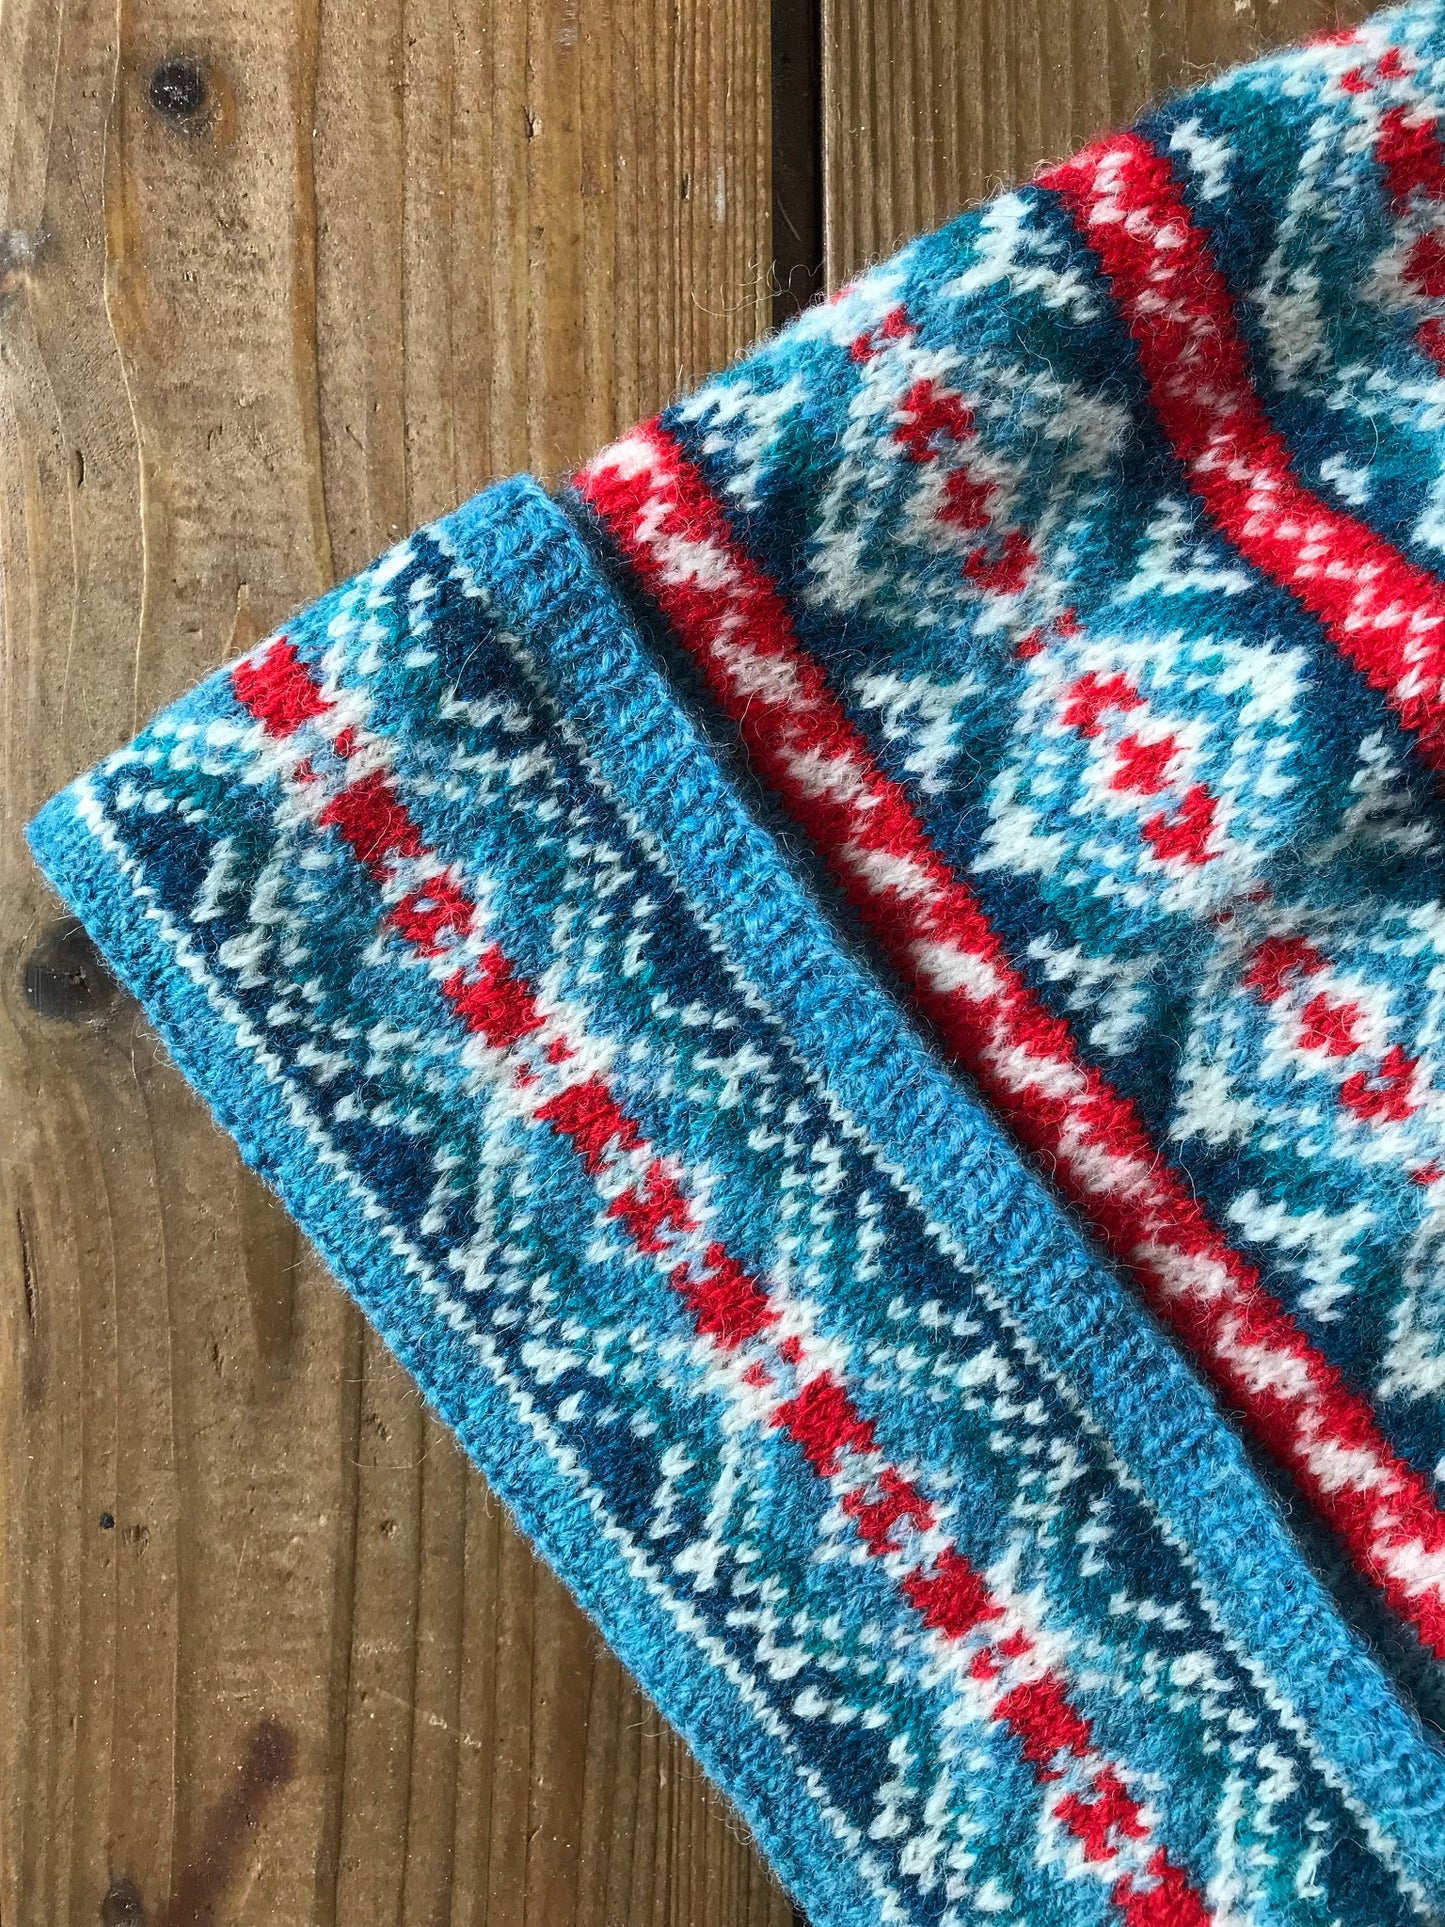 Knitting Jenny Pattern 22: Fair Isle Inspired Fisherman’s Kep and Design Workbook